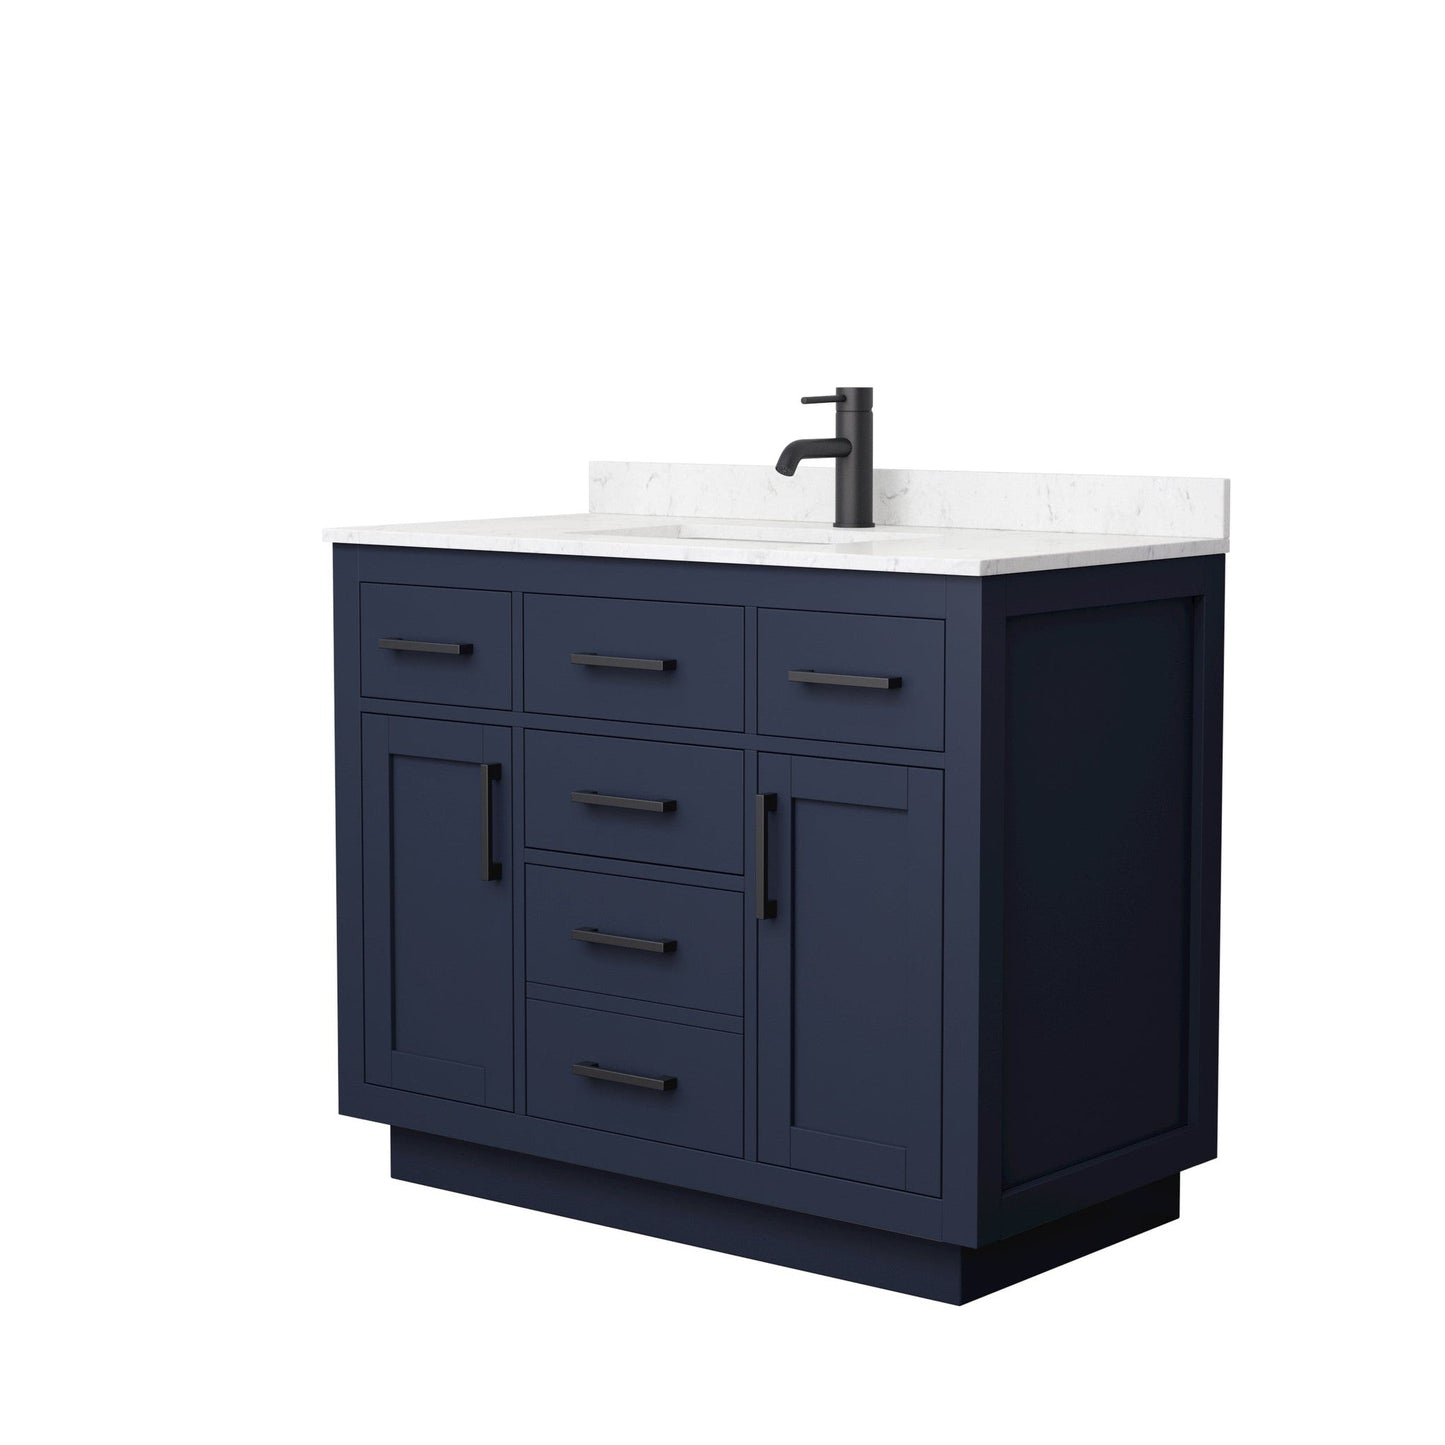 Beckett 42" Single Bathroom Vanity With Toe Kick in Dark Blue, Carrara Cultured Marble Countertop, Undermount Square Sink, Matte Black Trim